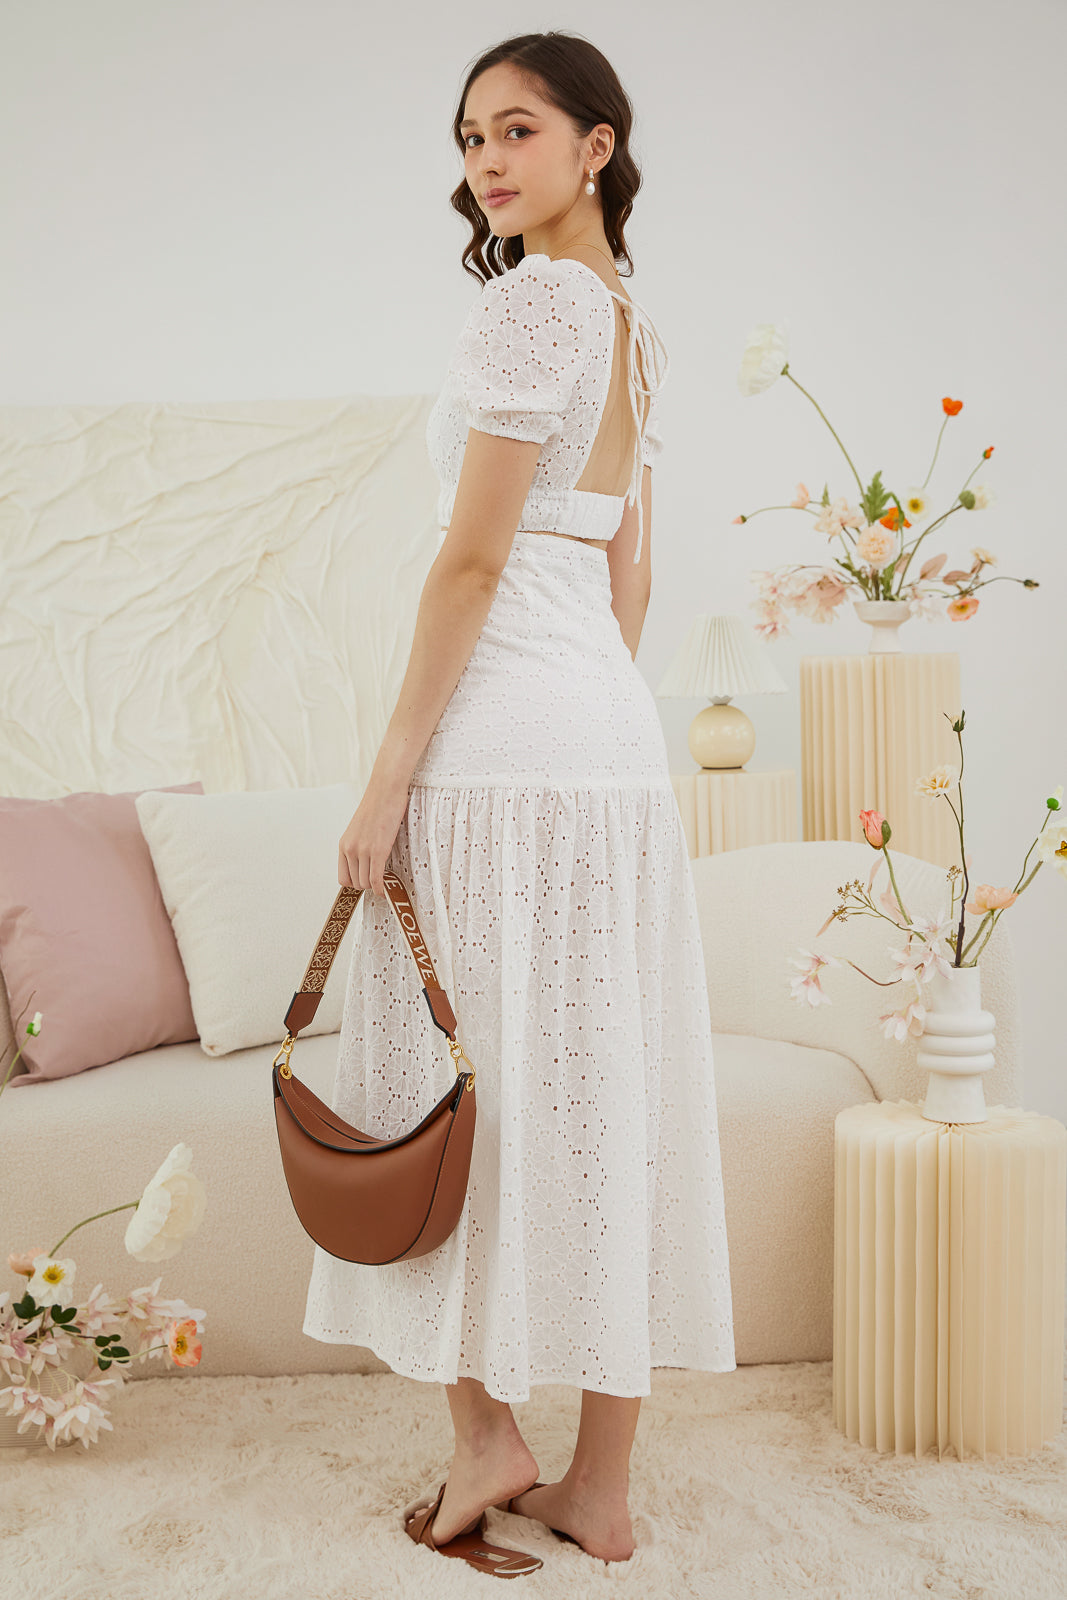 Flourish Eyelet Midi Skirt in White